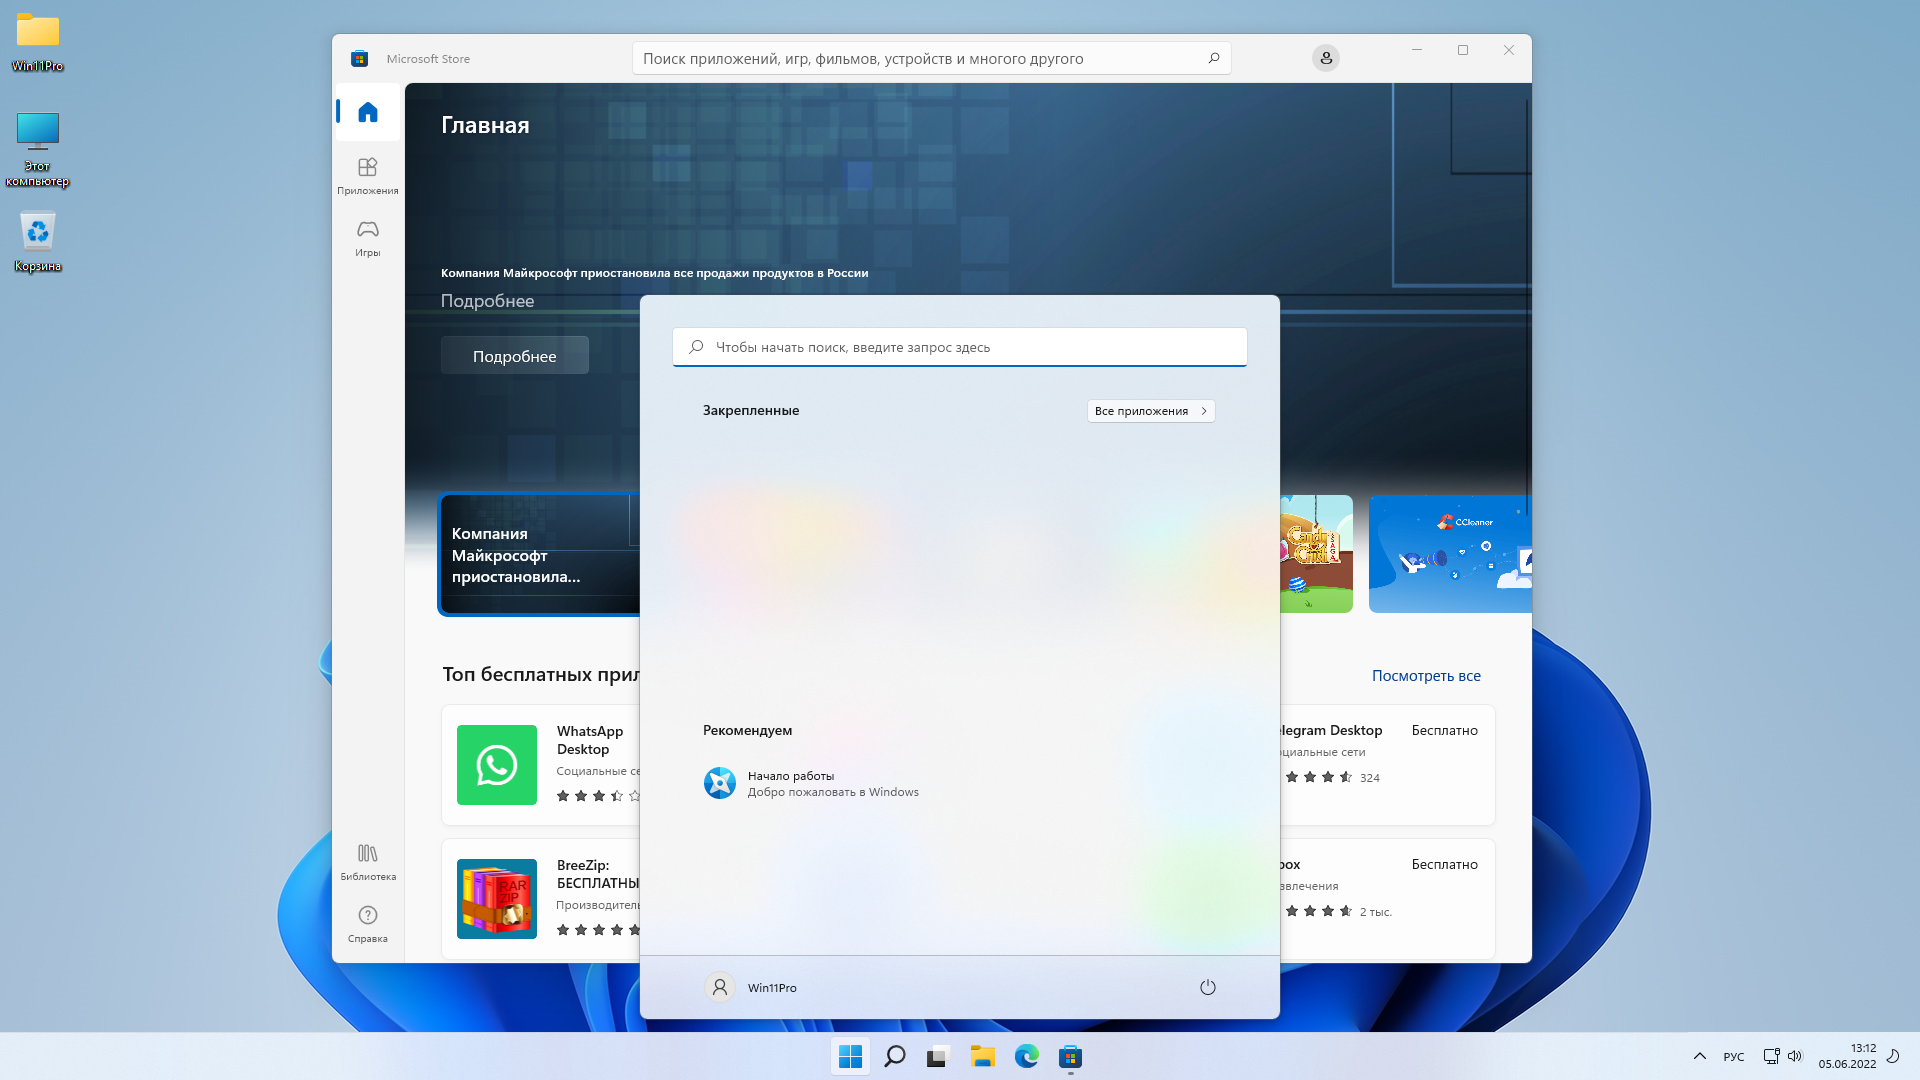 Windows 11 Pro 21H2 22000.675 x64 ru by SanLex [Universal] [Ru] 2022.06.05